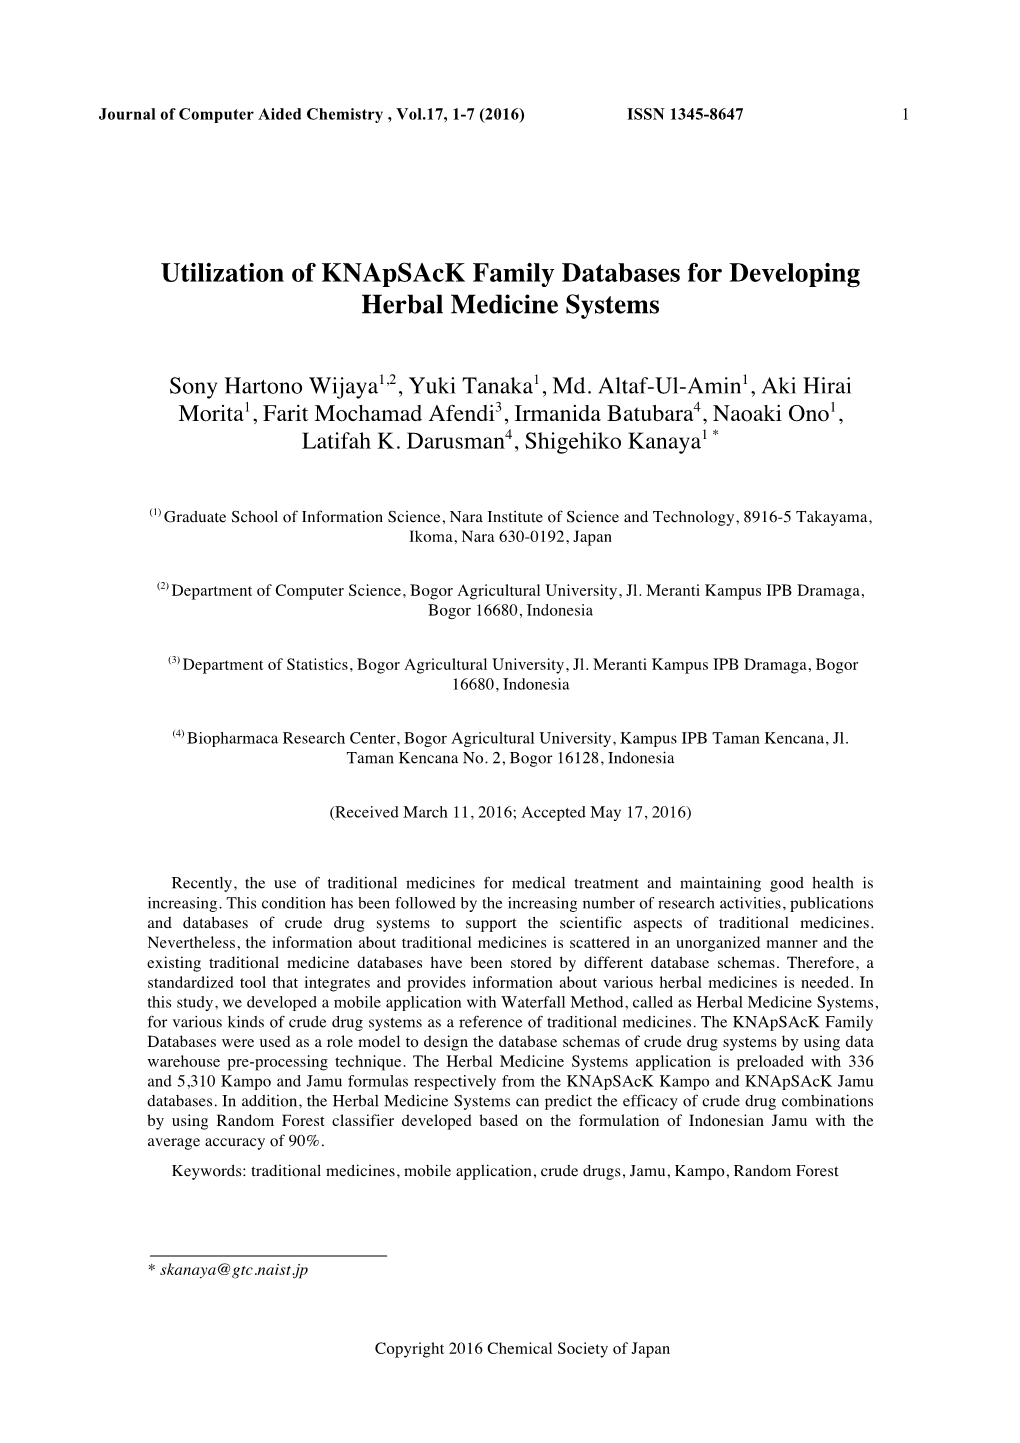 Utilization of Knapsack Family Databases for Developing Herbal Medicine Systems